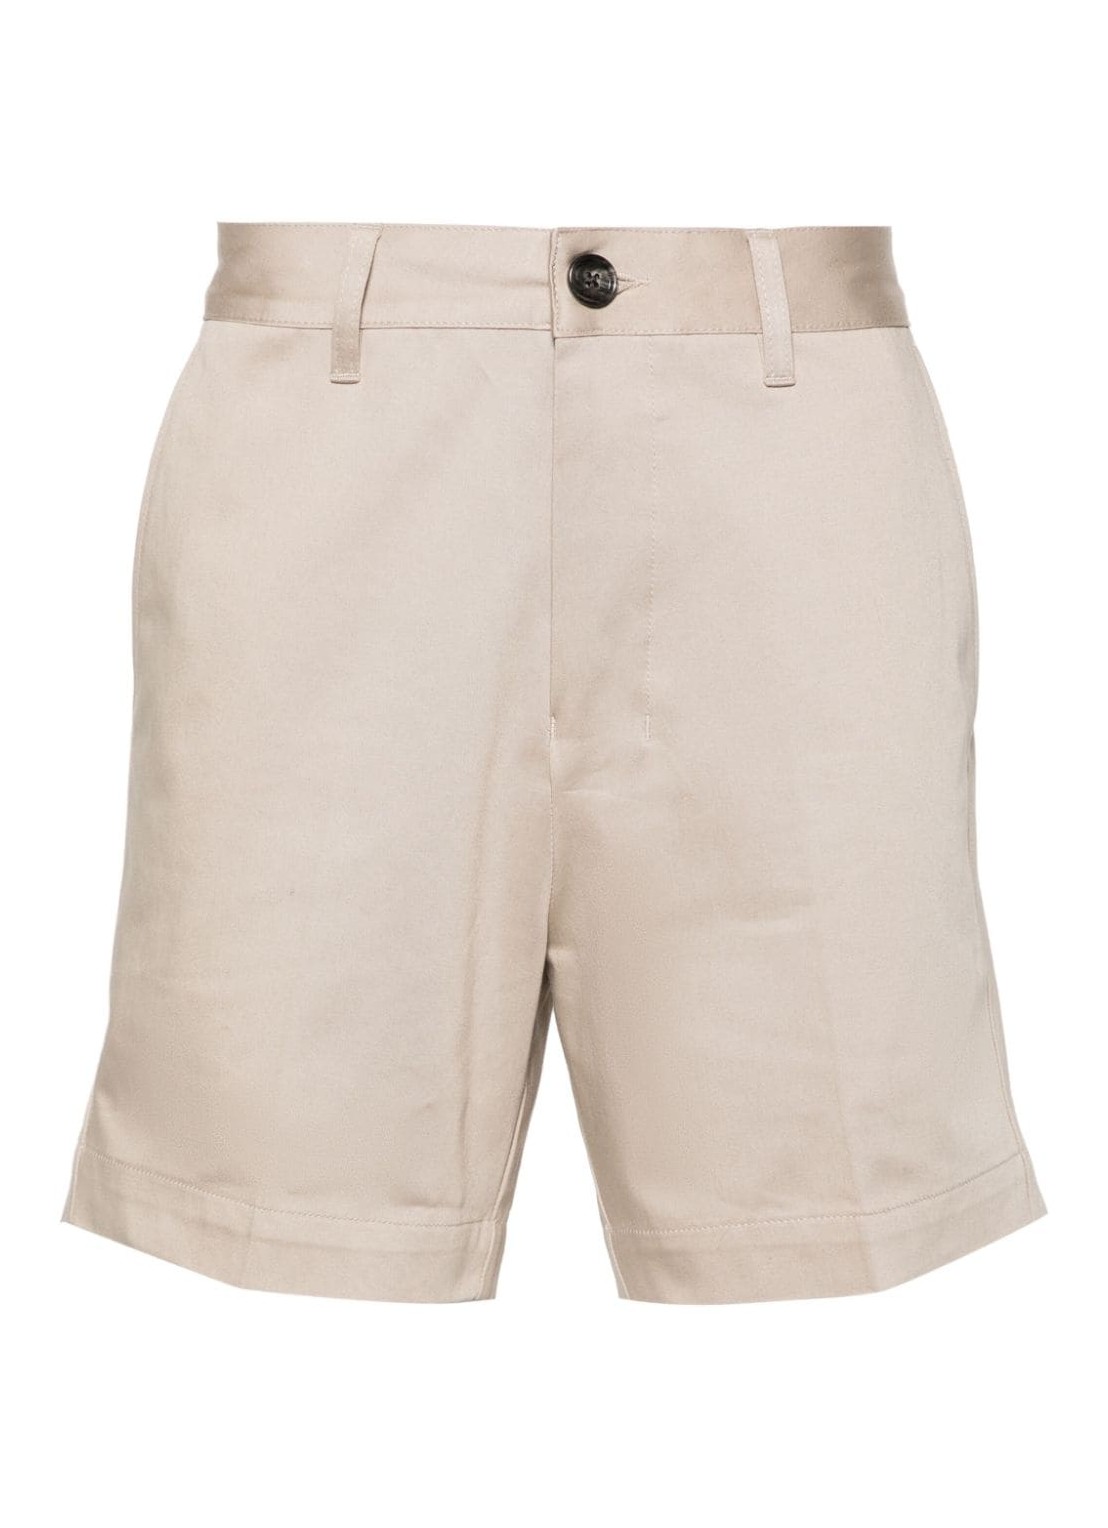 Pantalon corto ami short pant manchino shorts - hso004co0009 271 talla beige
 